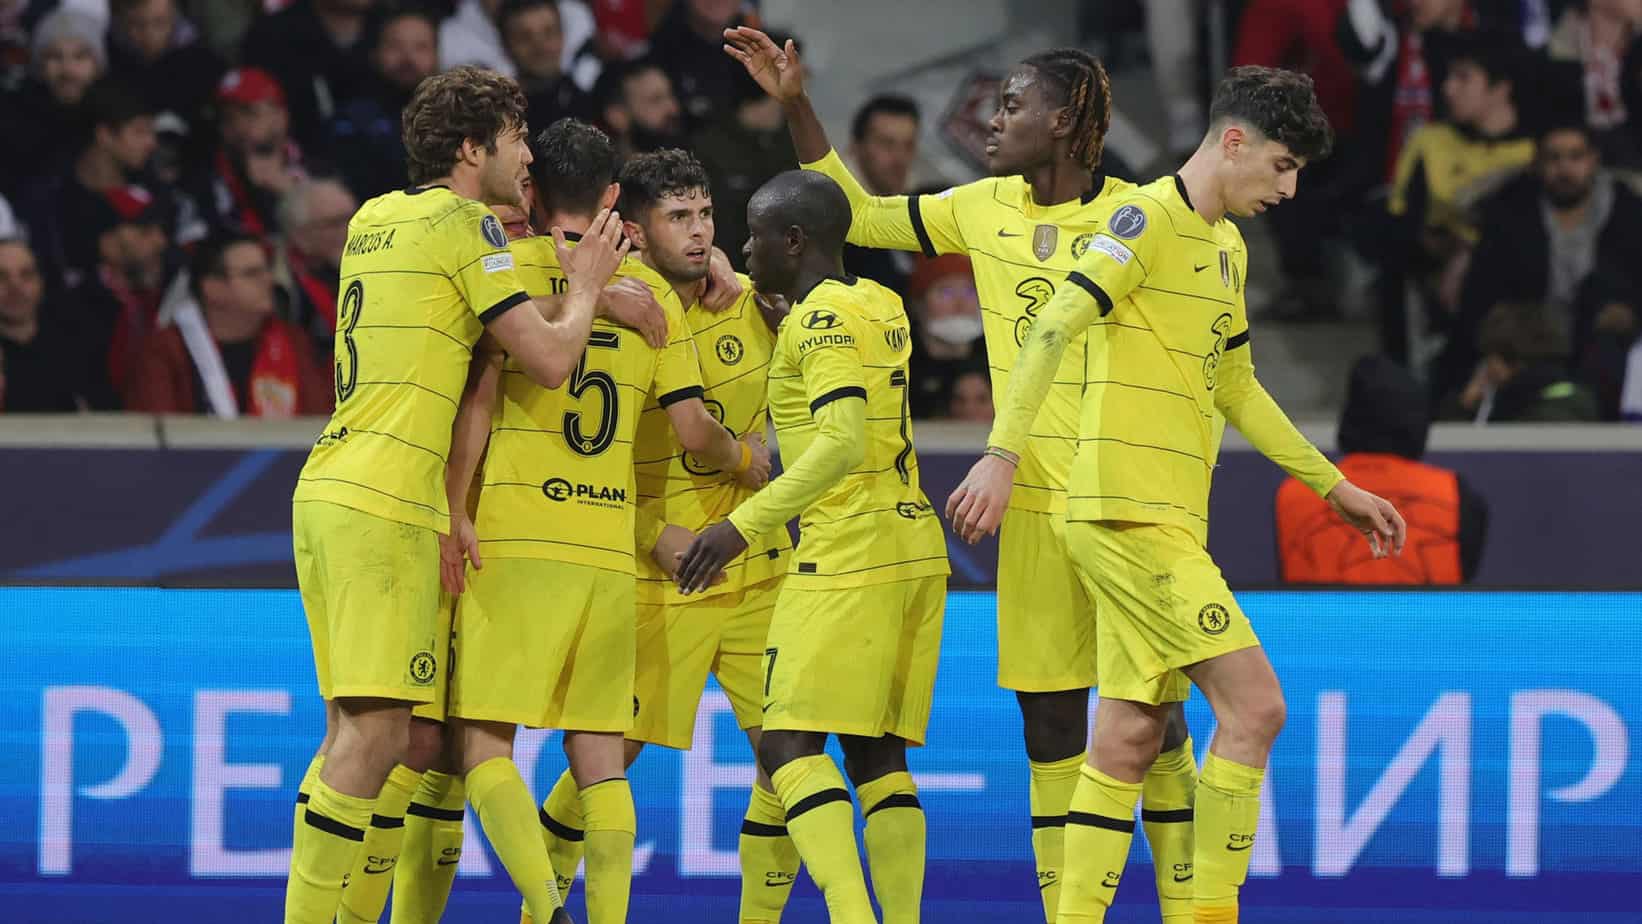 Lille (1) vs. Chelsea (2) – Results